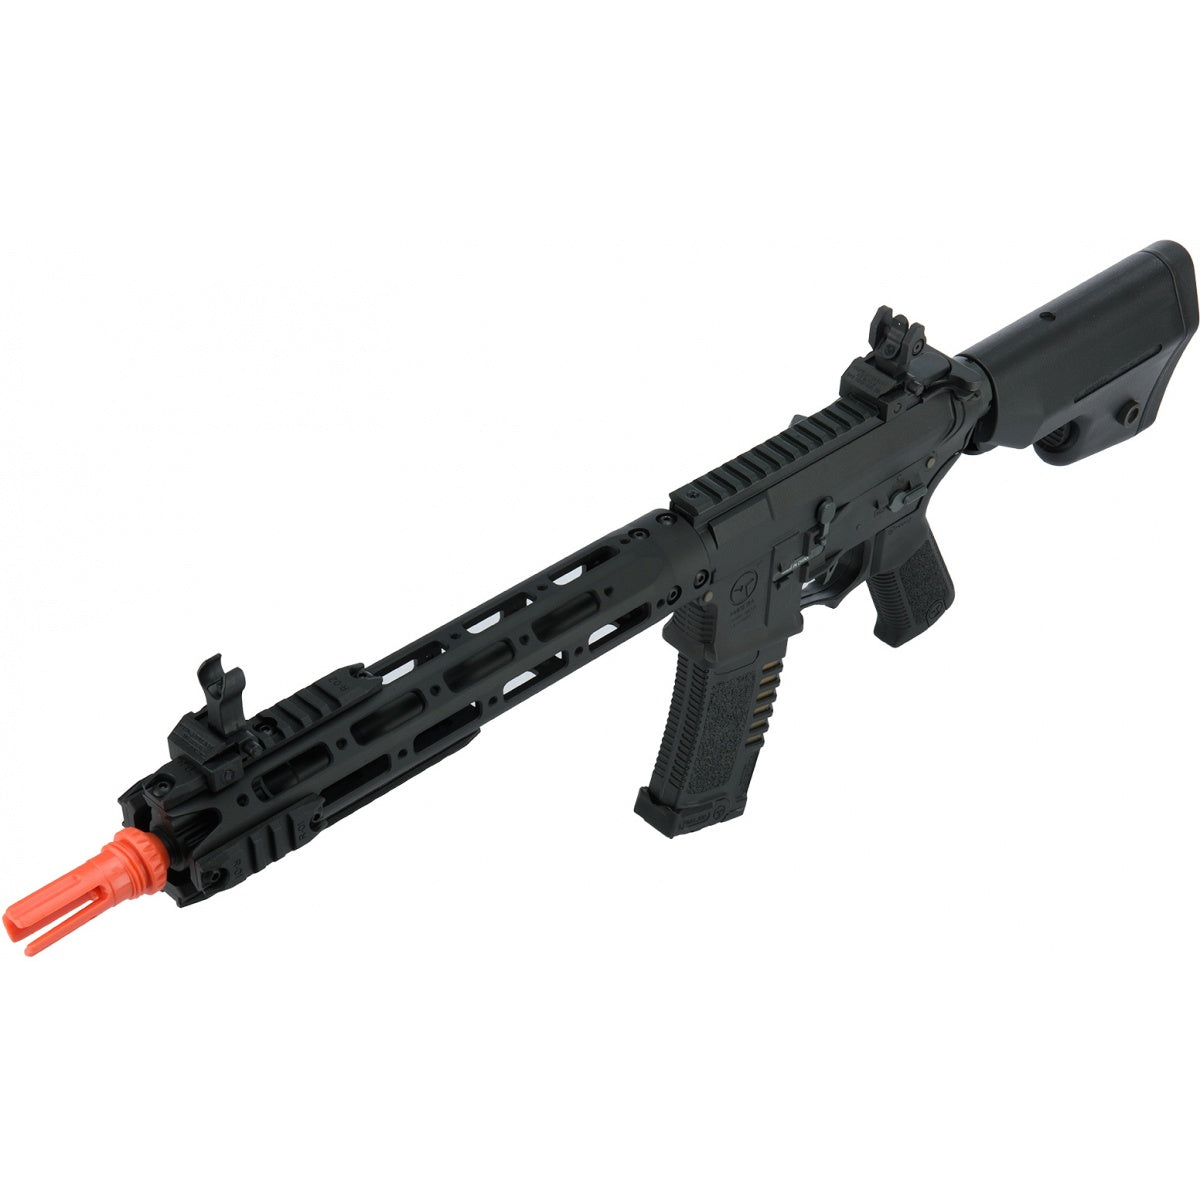 [ARES] Amoeba CG-003 Airsoft AEG Gun[BLK]